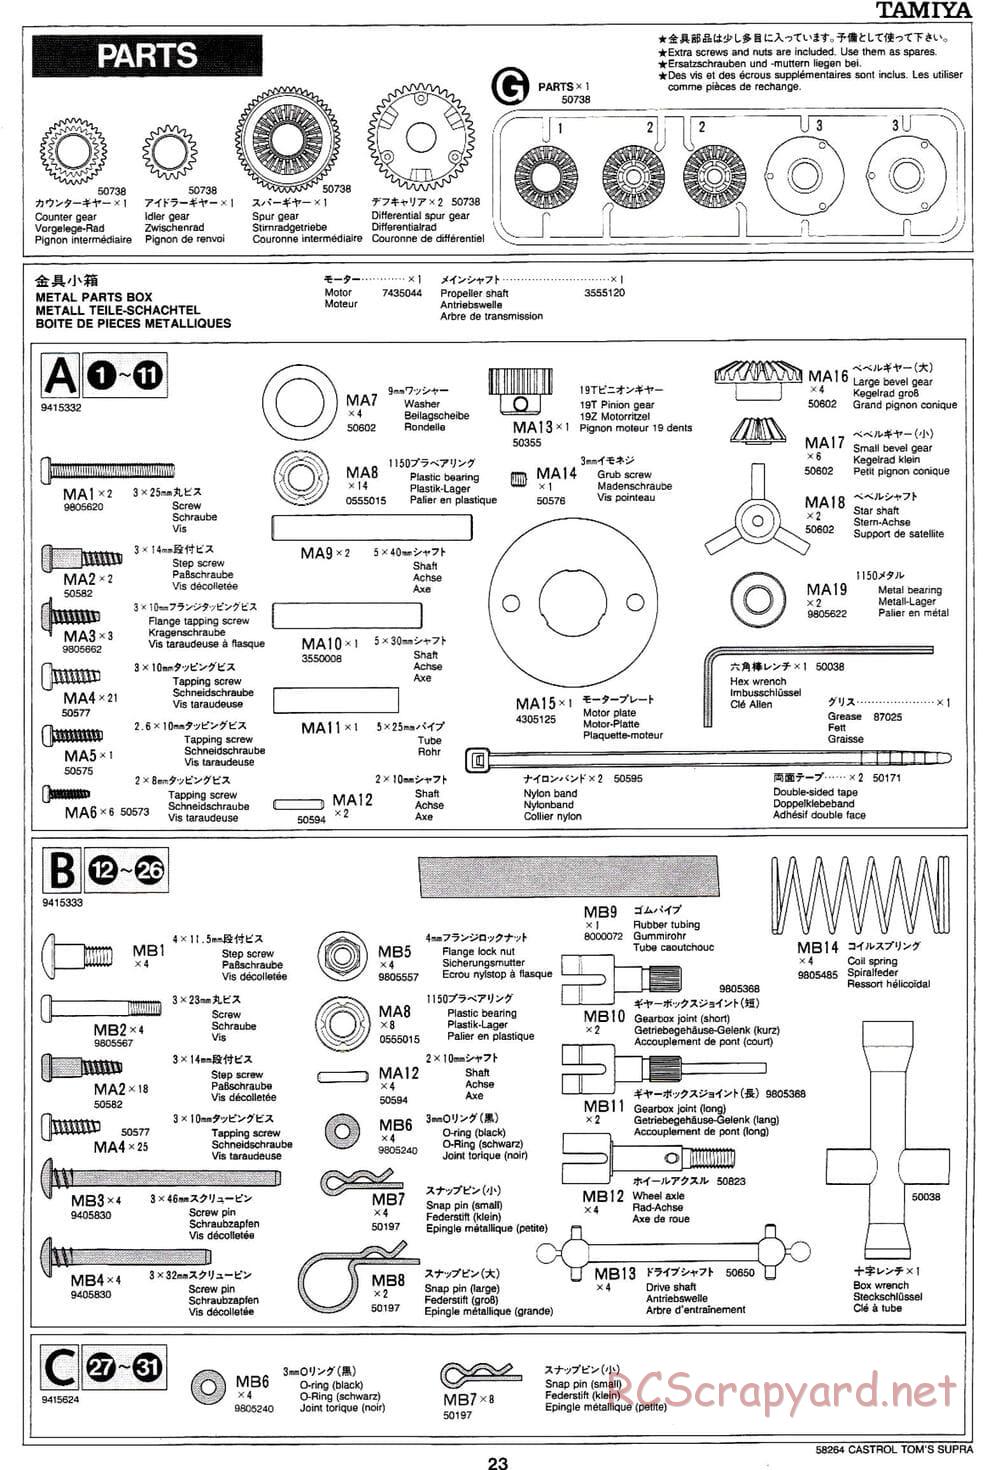 Tamiya - Castrol Tom's Supra 2000 - TL-01 Chassis - Manual - Page 23